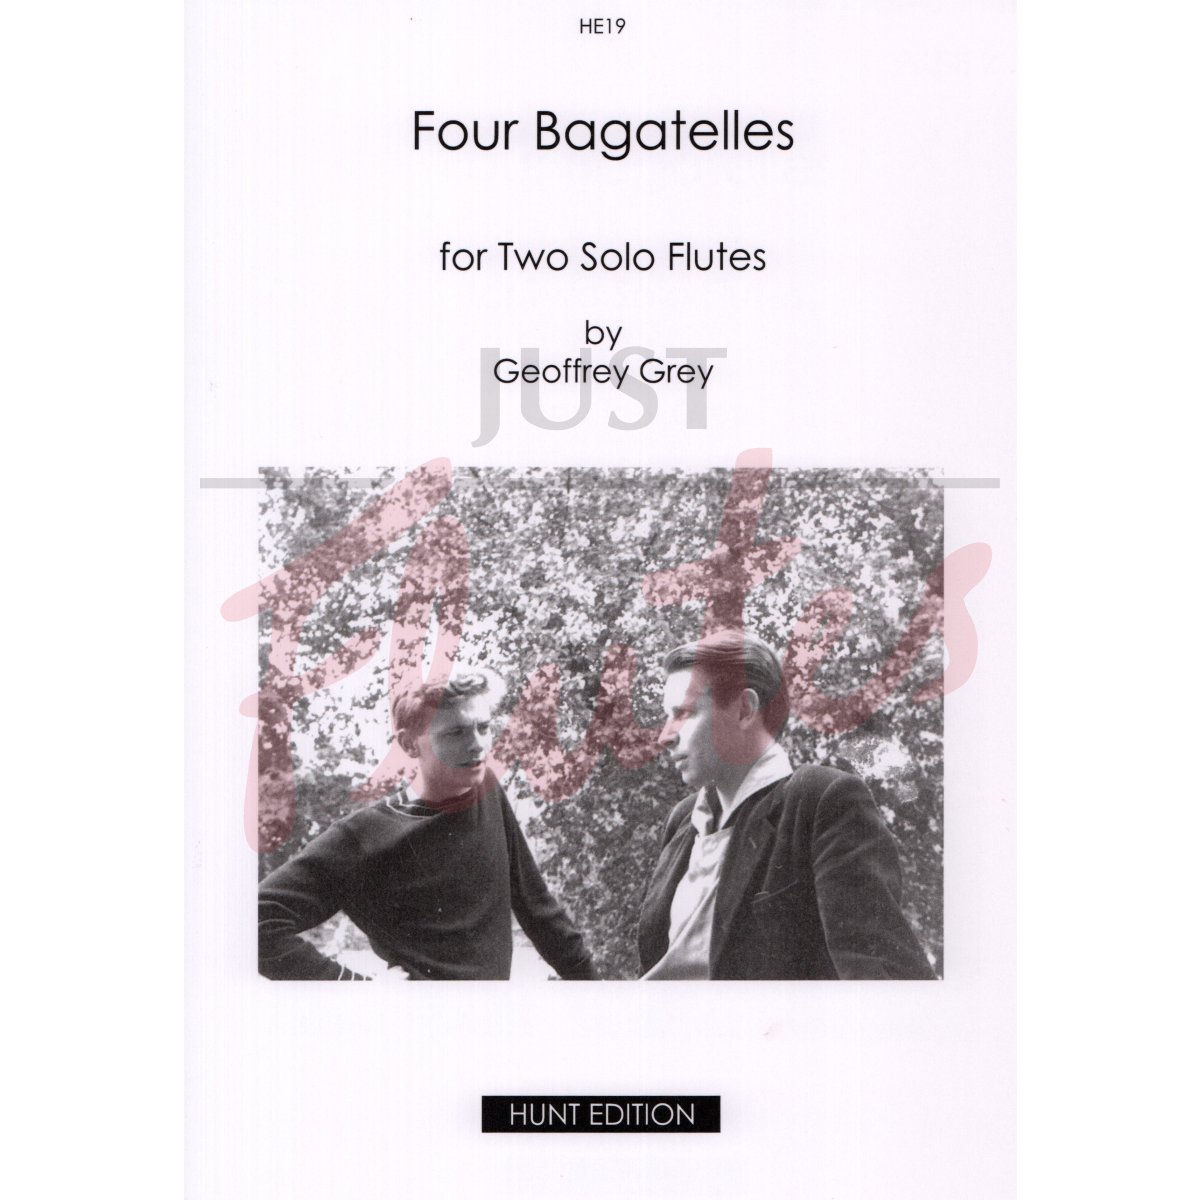 Four Bagatelles for Two Solo Flutes